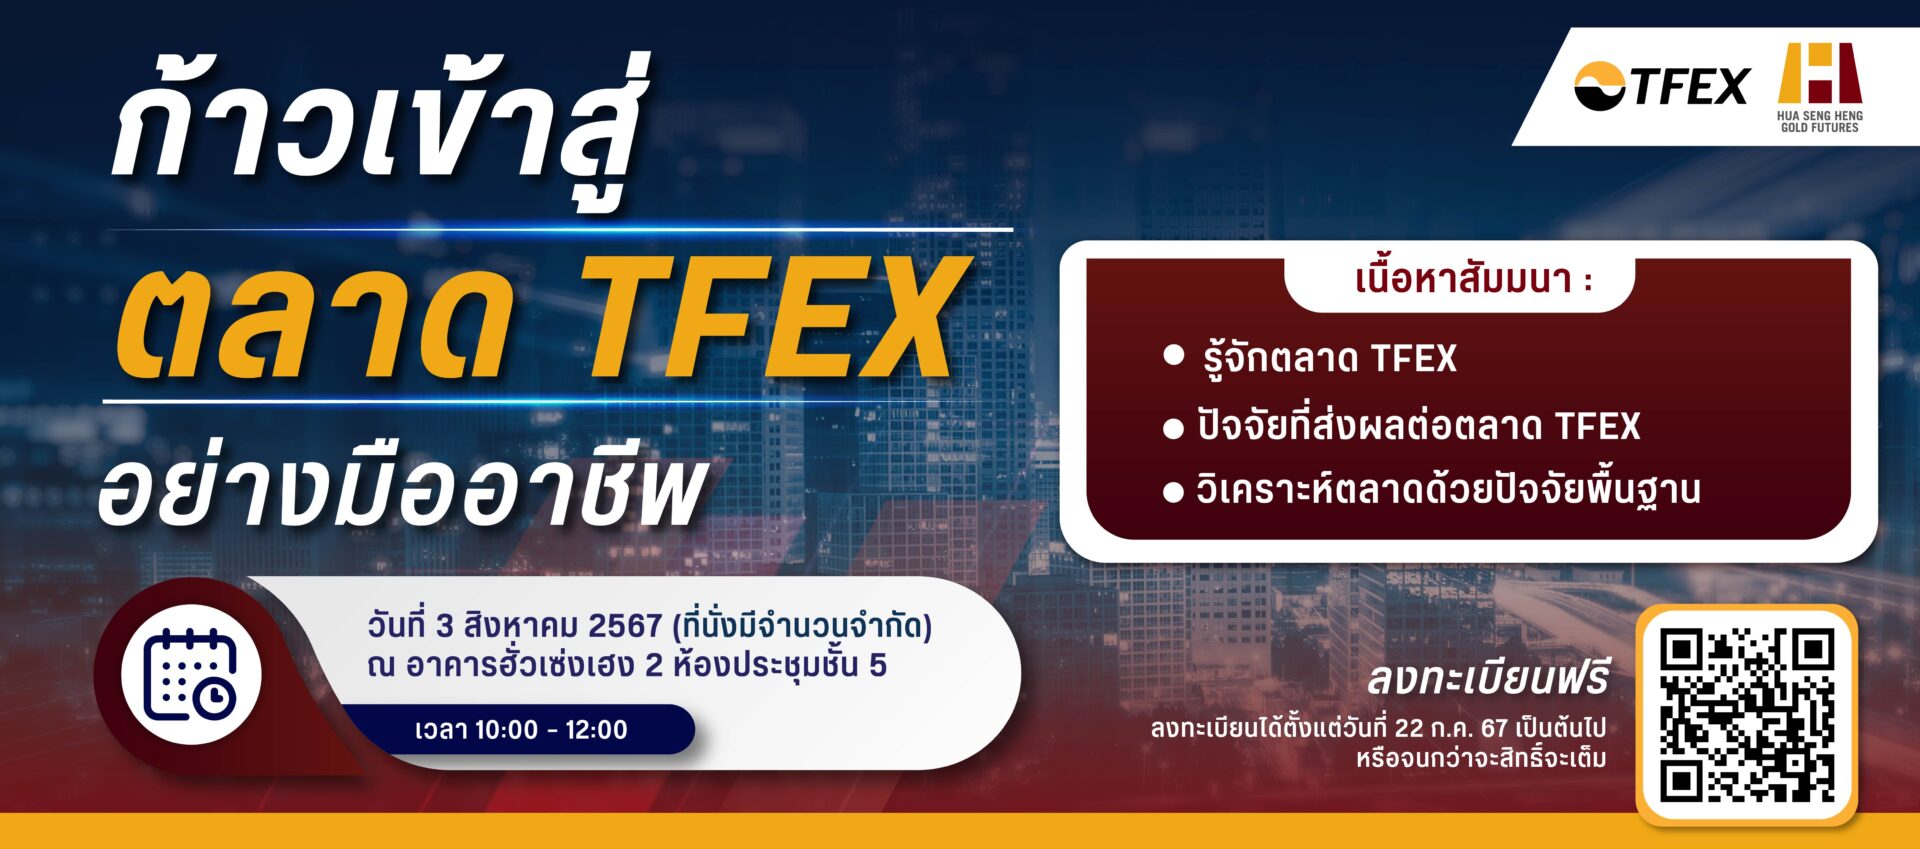 poster tfex บรรยาย ก้าวเข้าสู่ ตลาด TFEX banner desktop 0